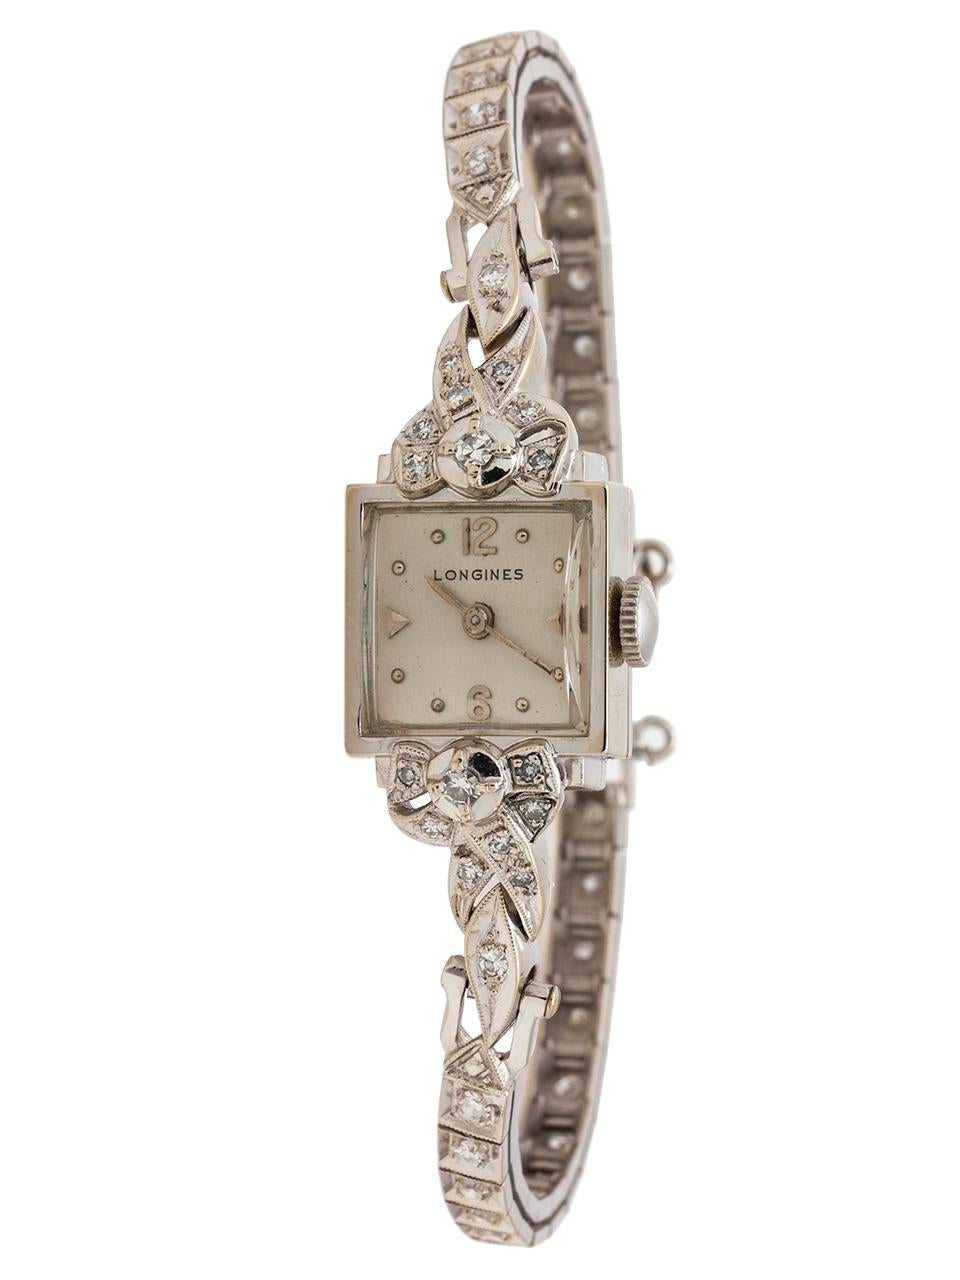 Women's Longines White Gold Diamond manual wind Cocktail Wristwatch, circa 1951